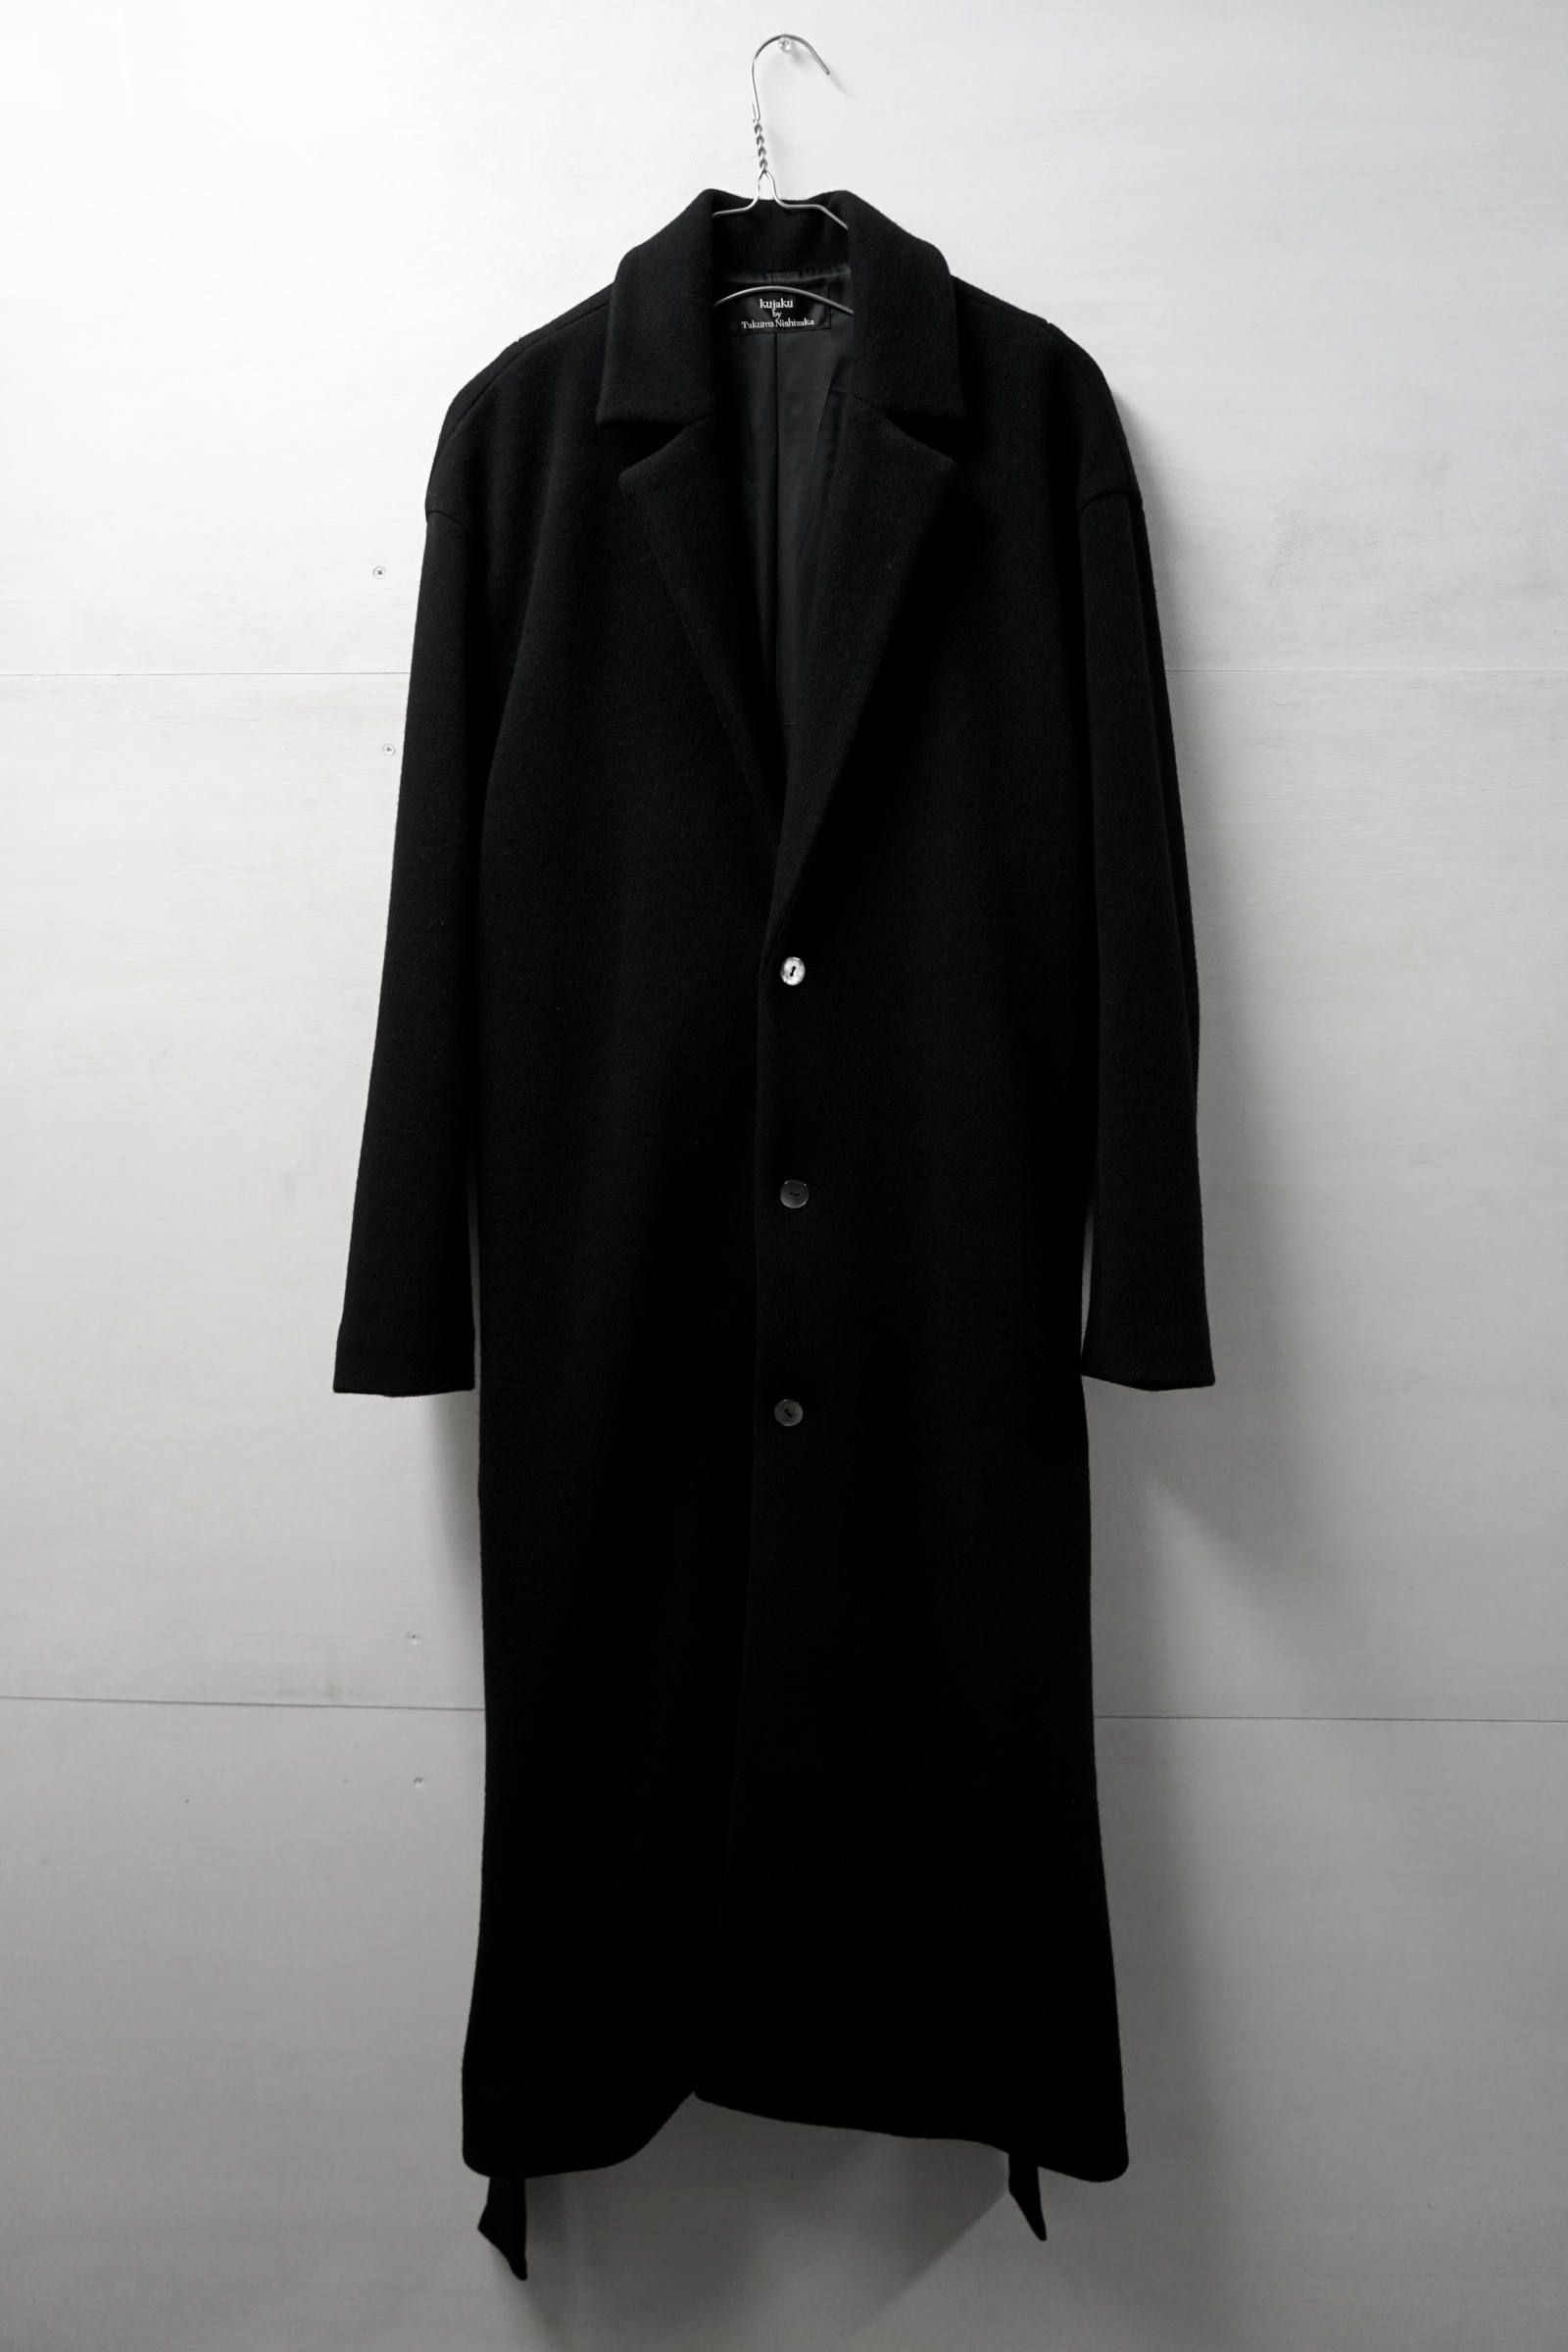 kujaku - 鈴蘭コート - Suzuran Coat BLACK | ADDICT WEB SHOP